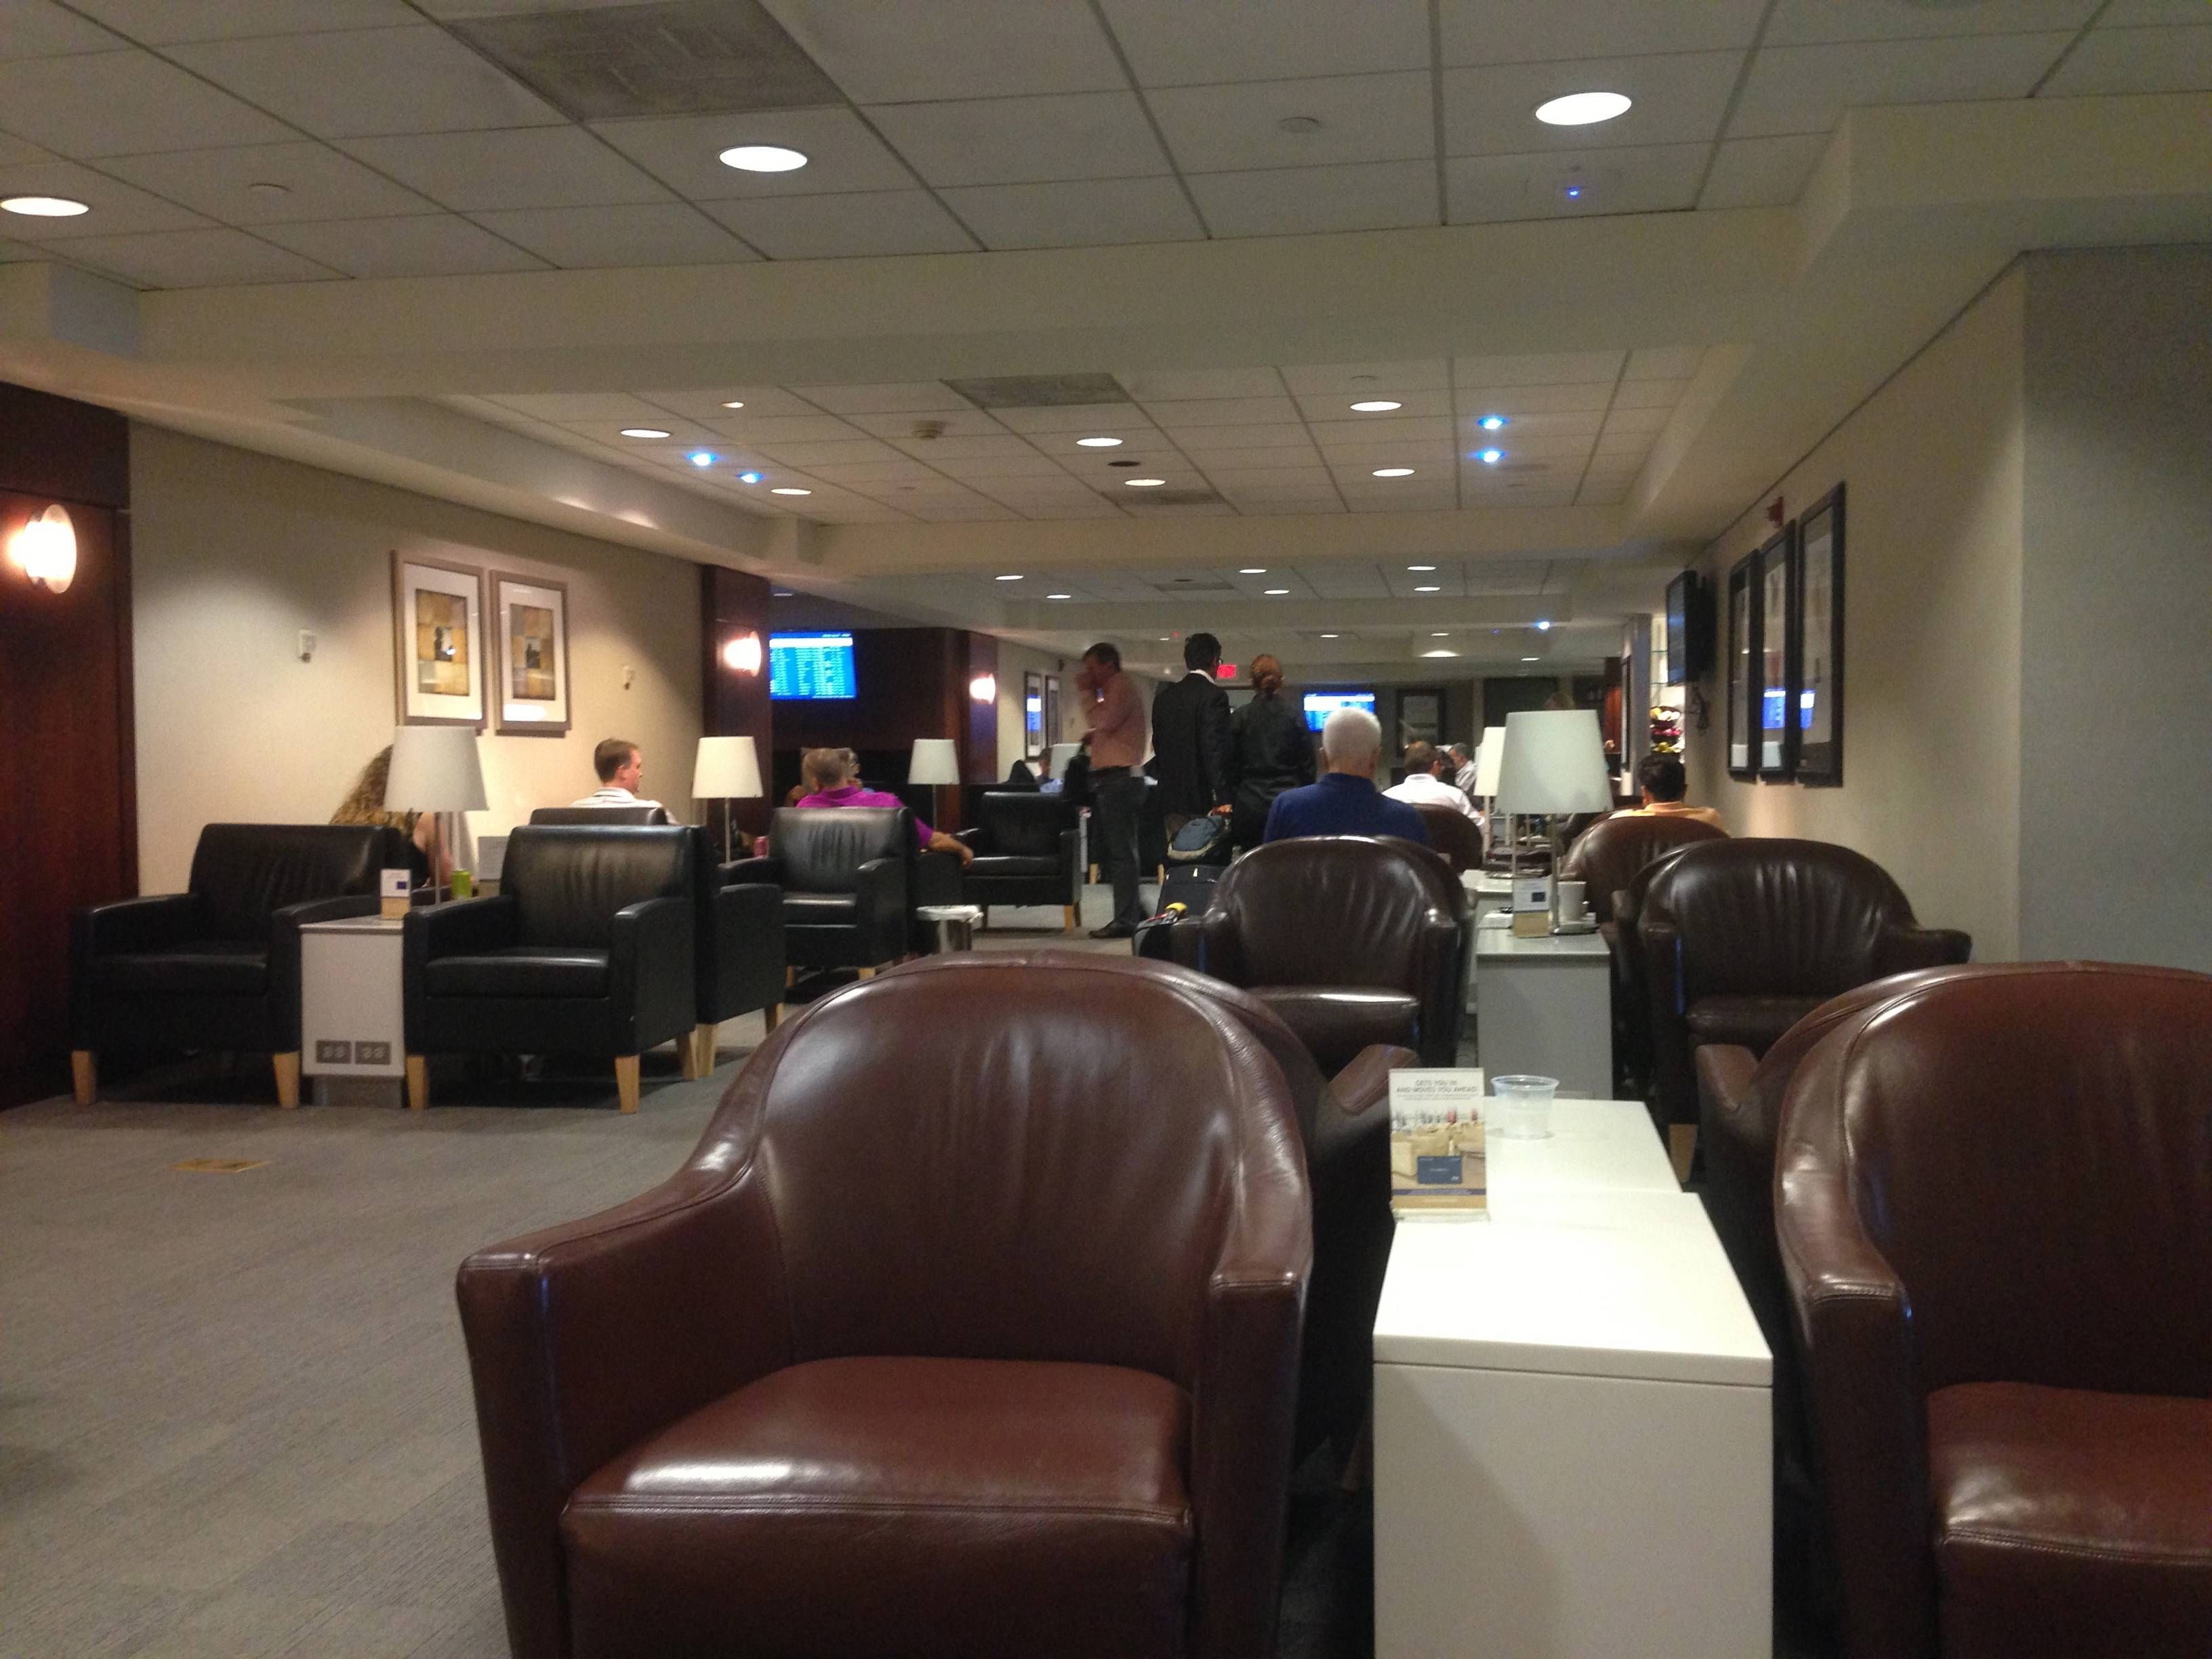 Sala VIP United Club no Aeroporto de Washington